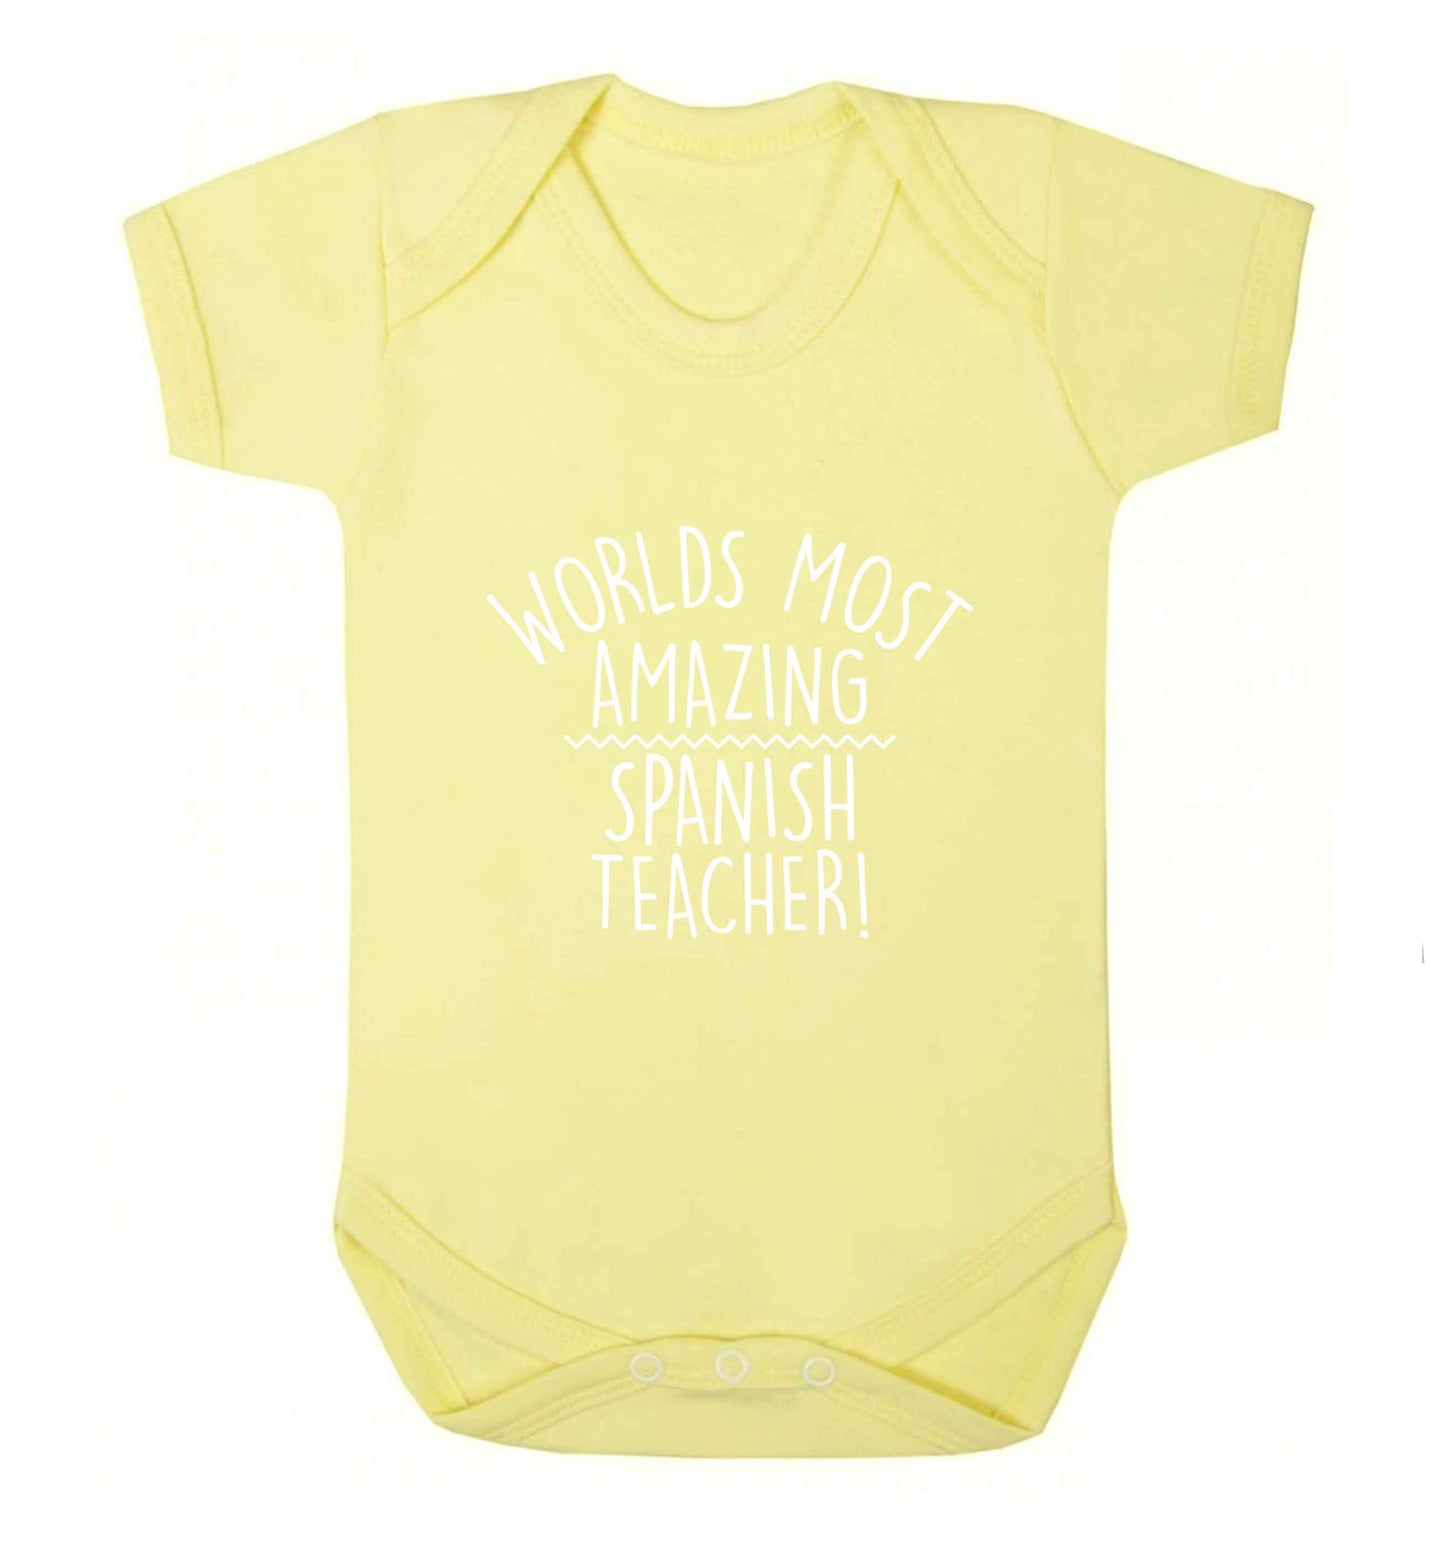 Worlds most amazing Spanish teacher baby vest pale yellow 18-24 months